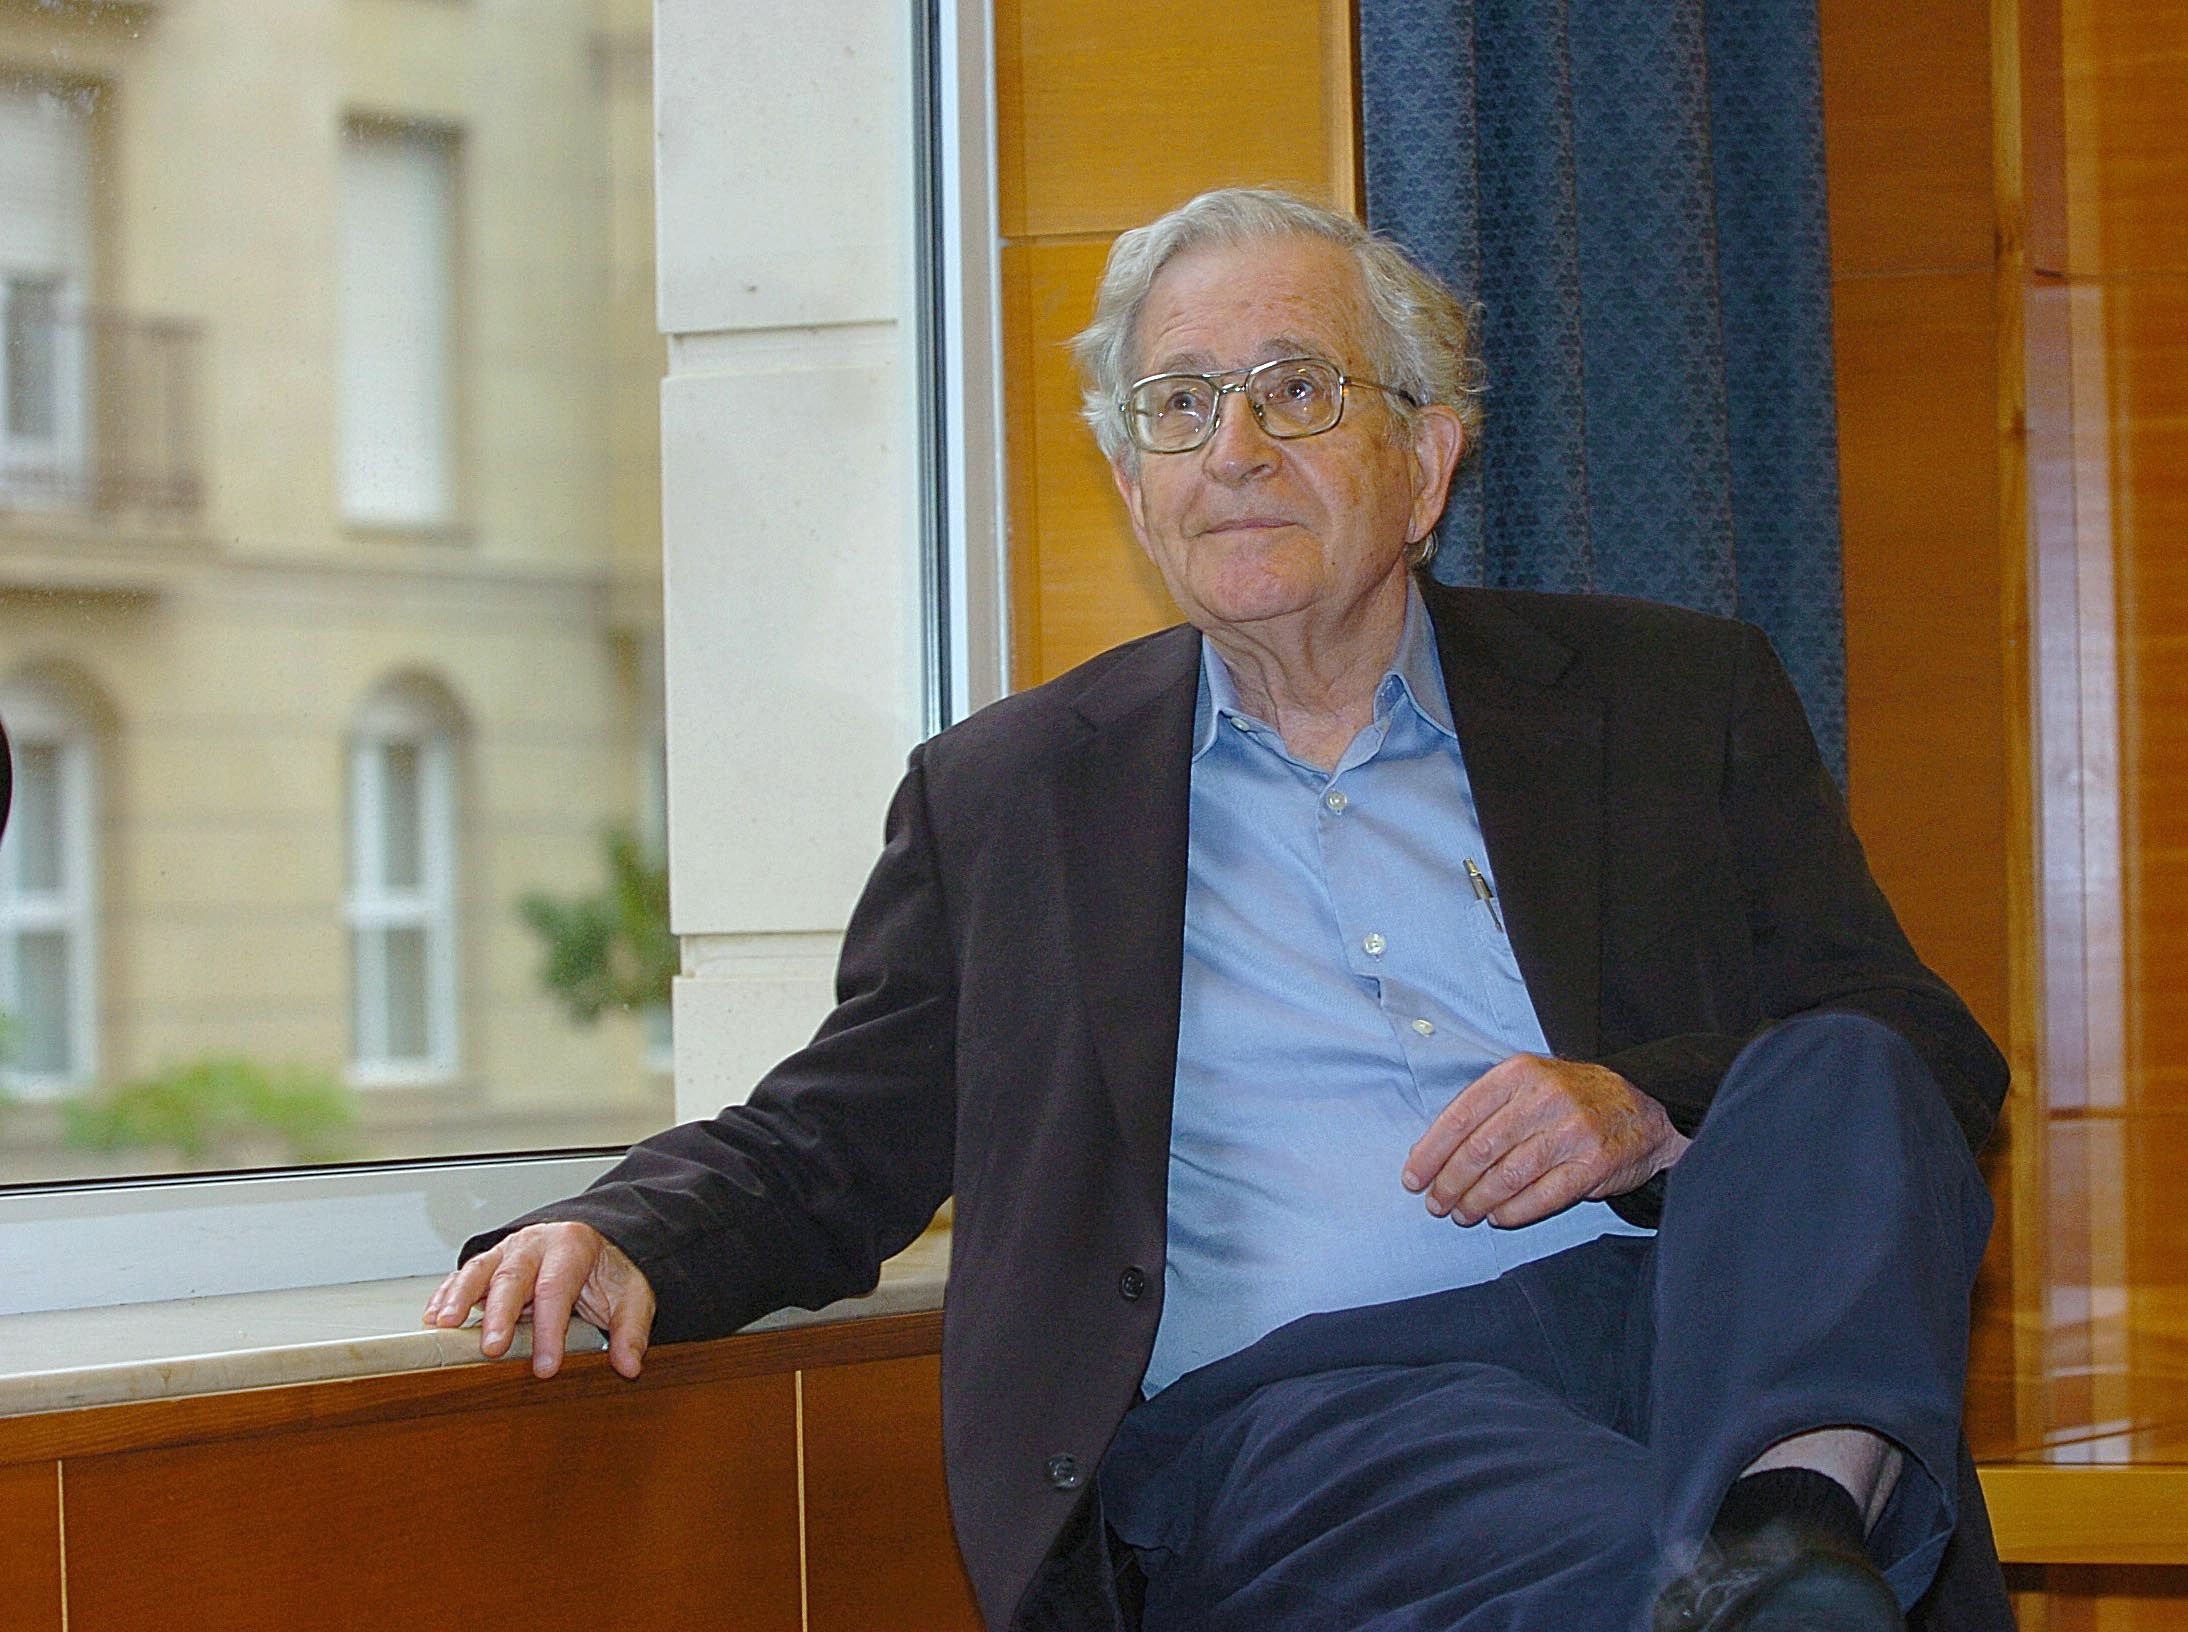 Noam Chomsky, 2006an, Donostian egon zenean. JON URBE / FOKU